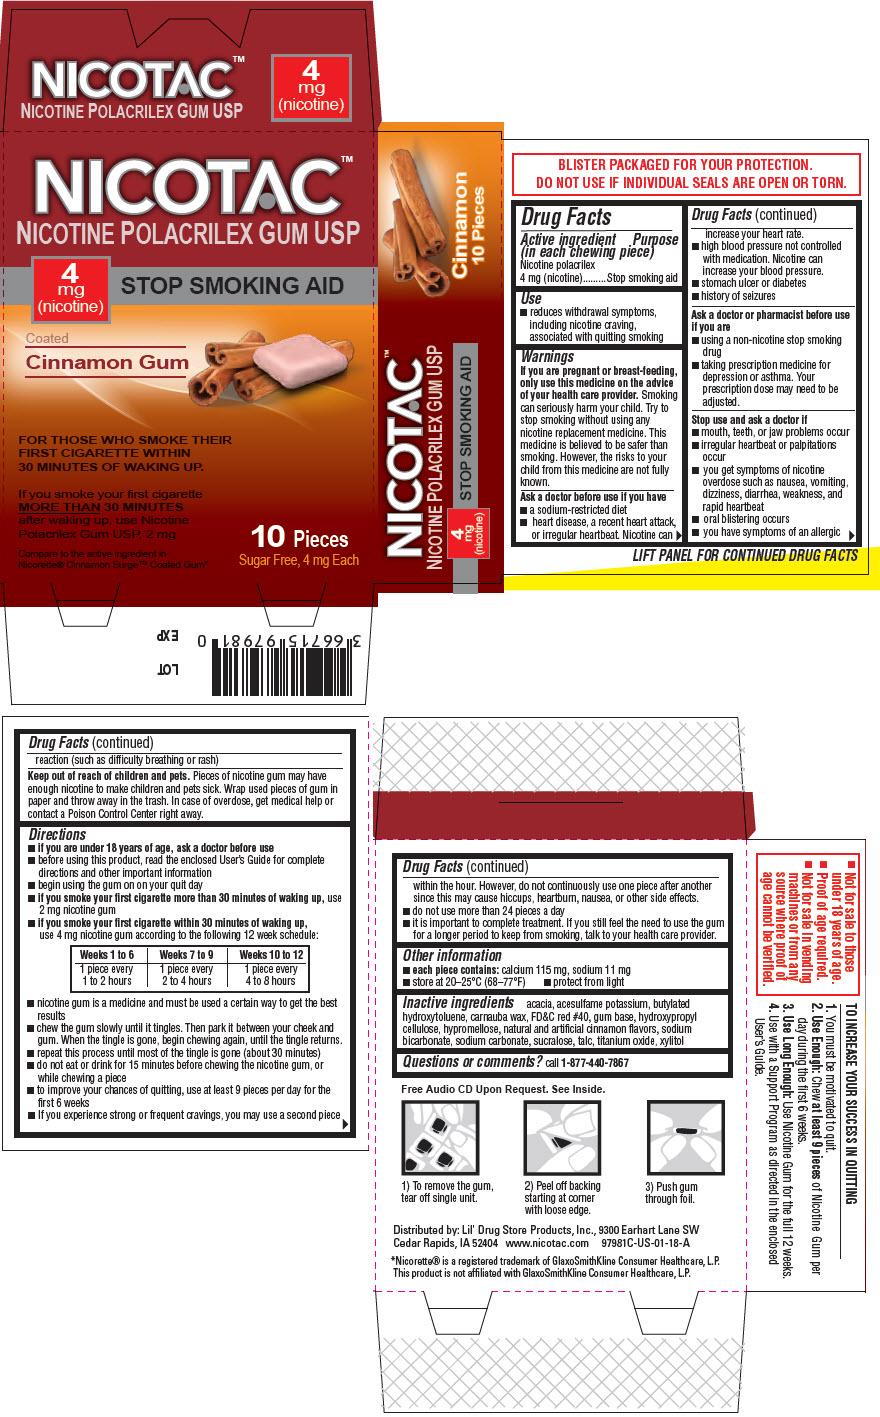 PRINCIPAL DISPLAY PANEL - 4 mg Gum Blister Pack Carton